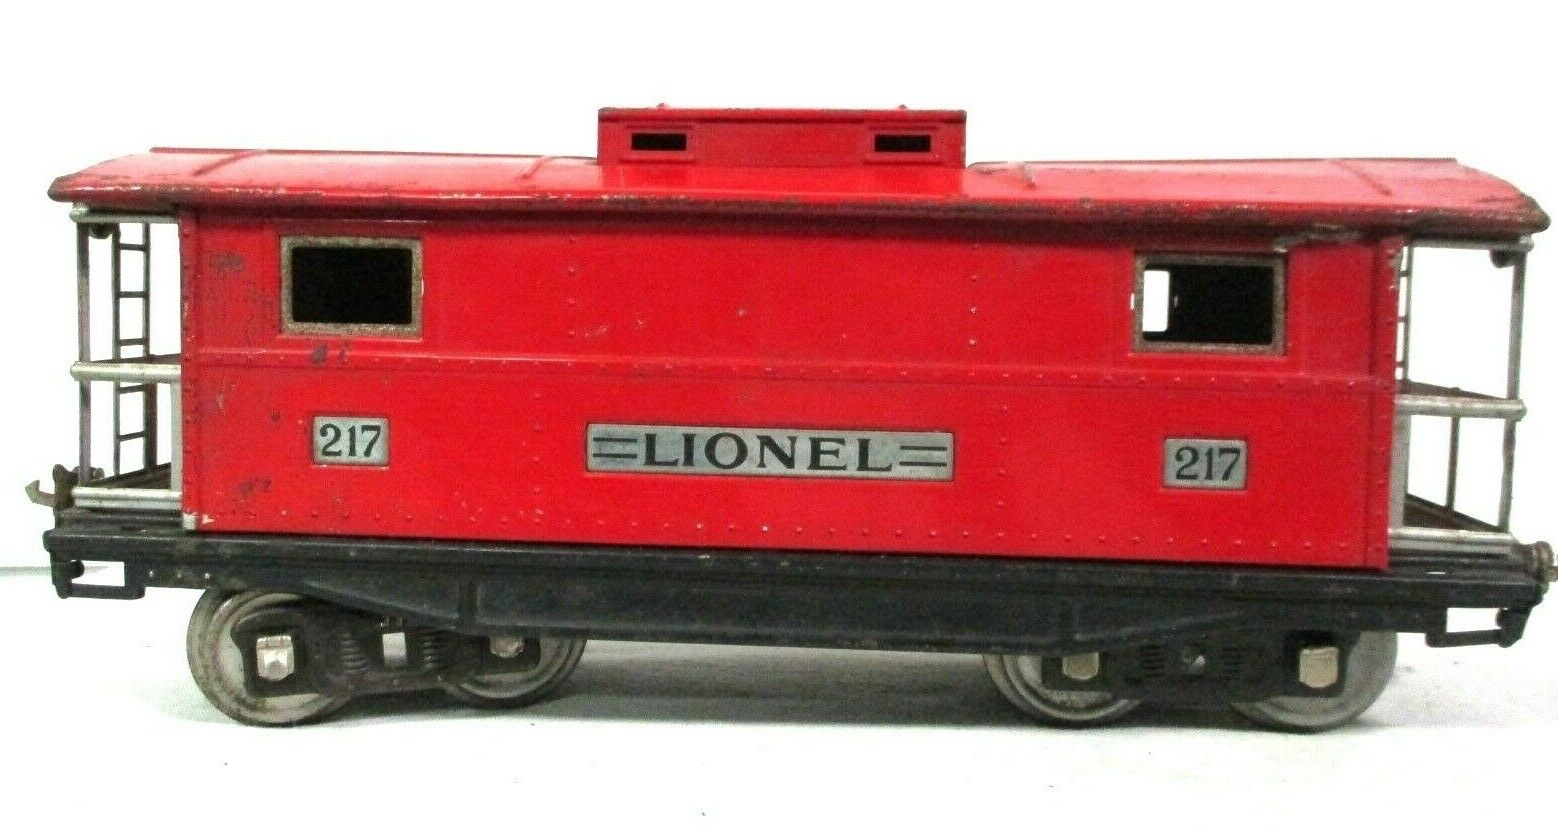 Lionel Lines # 217 Caboose In Red Standard Gauge Vintage Model Railway B56-15